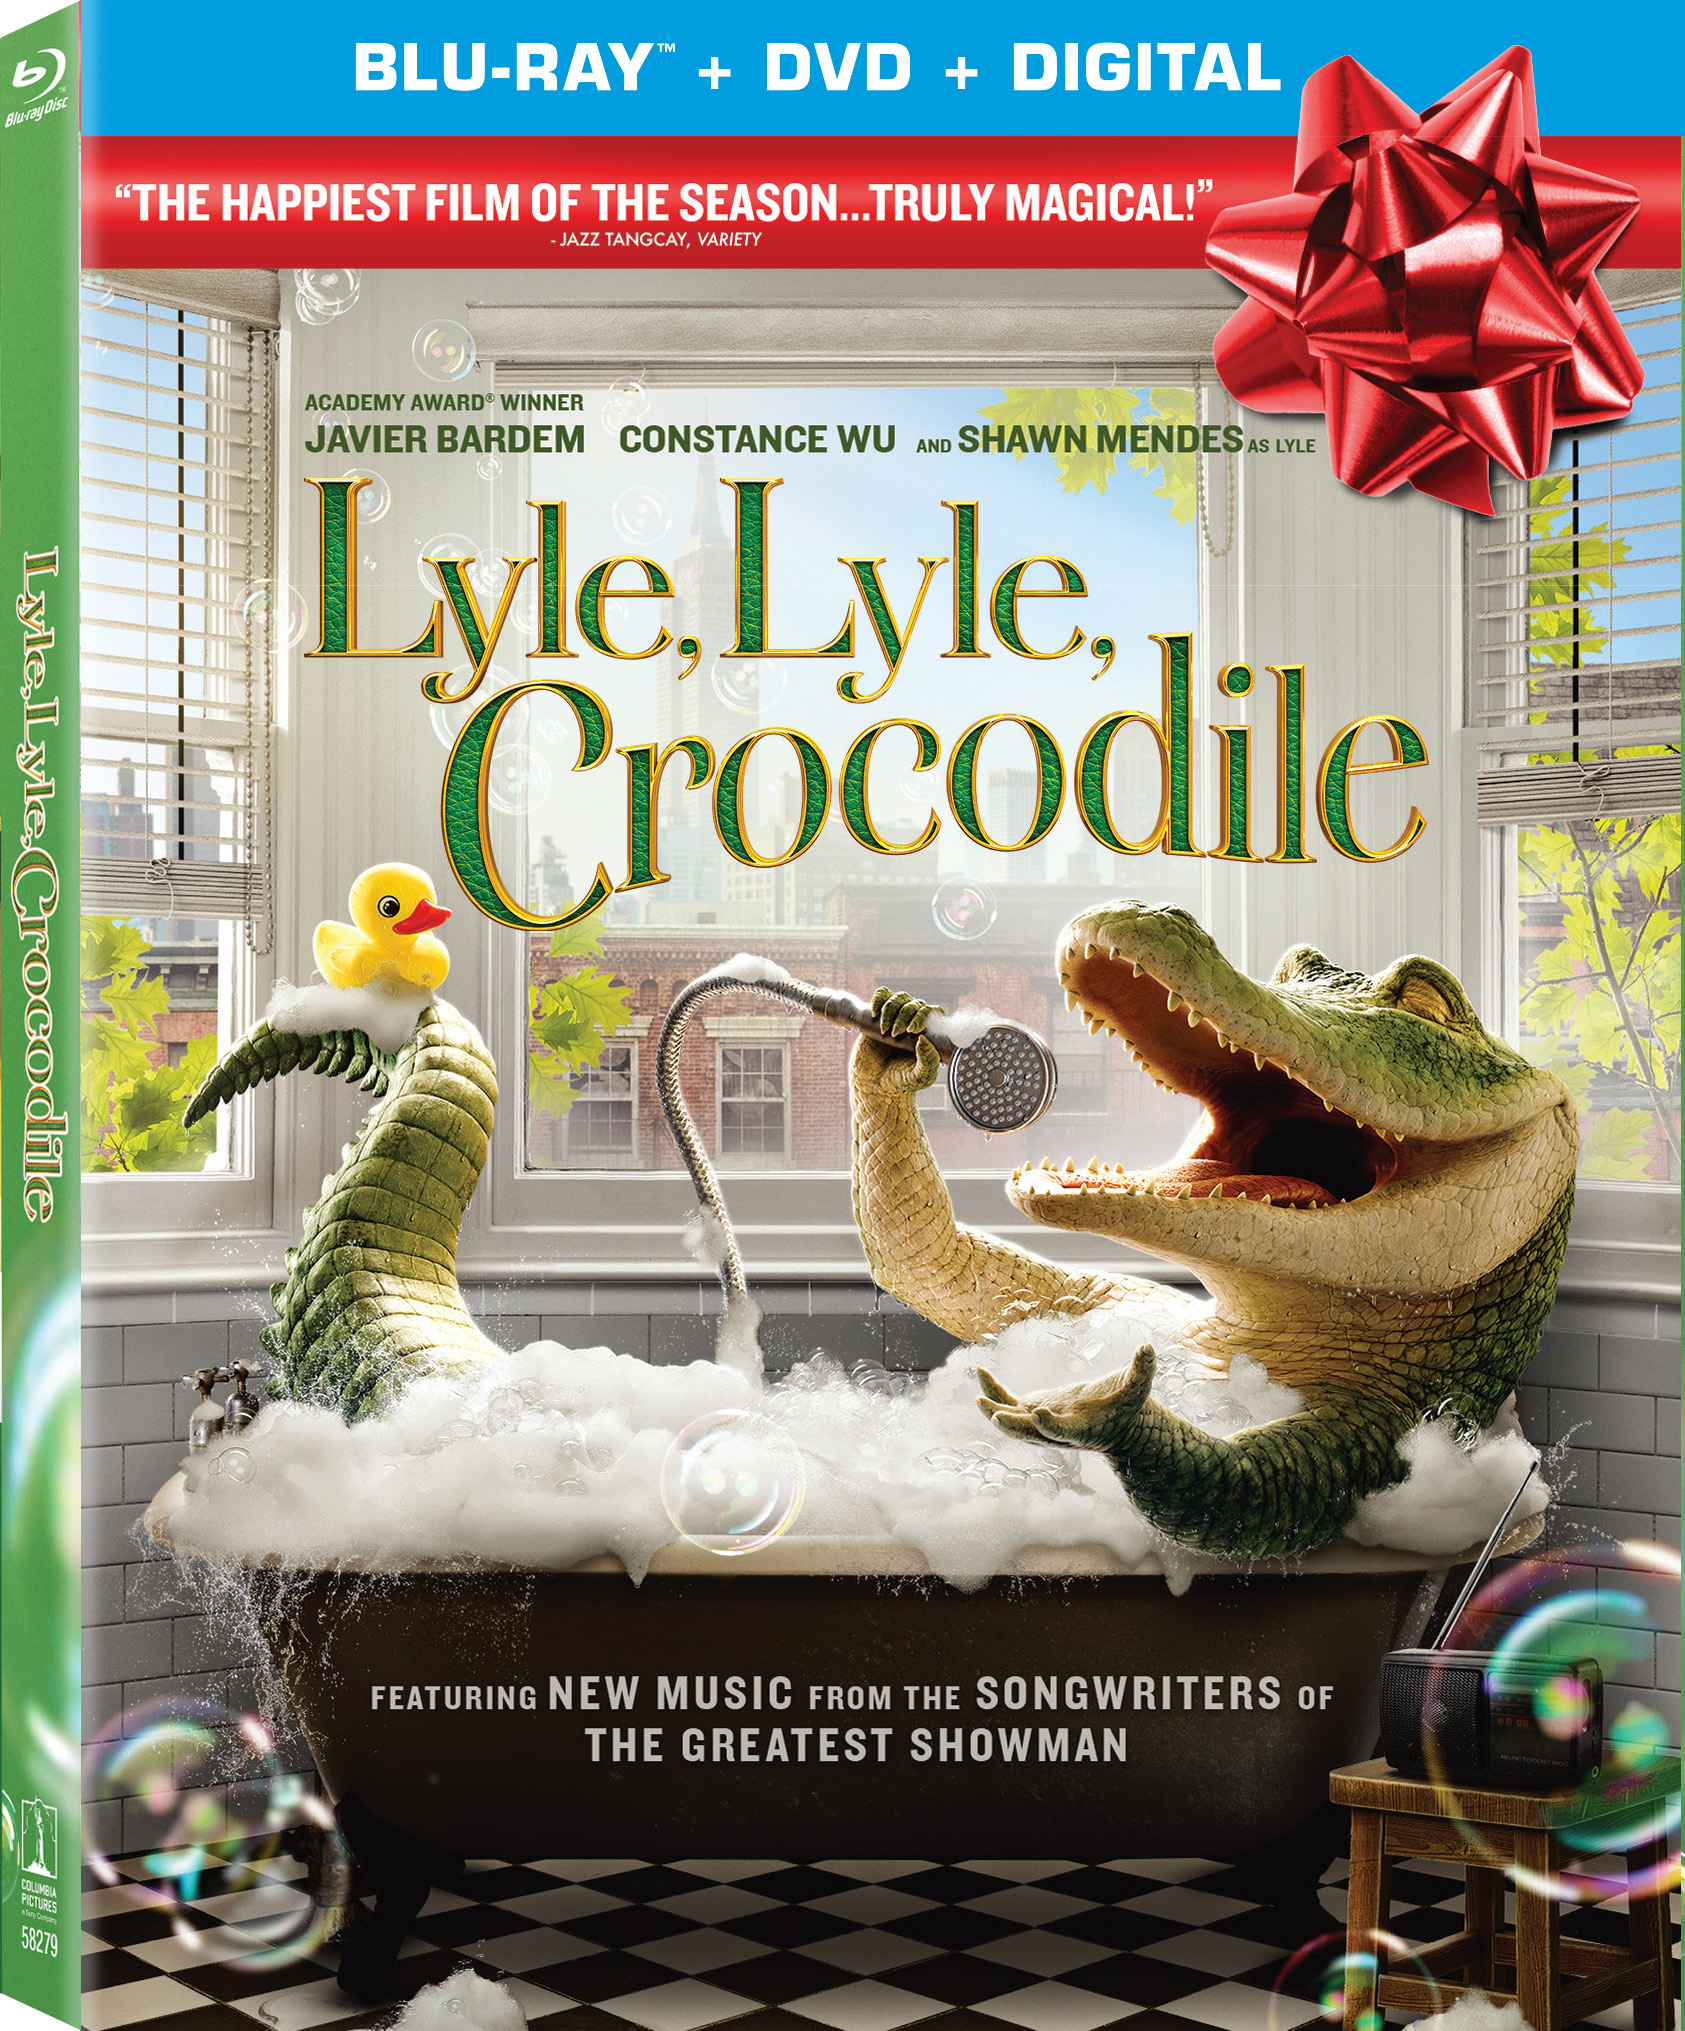 christian movie reviews lyle lyle crocodile